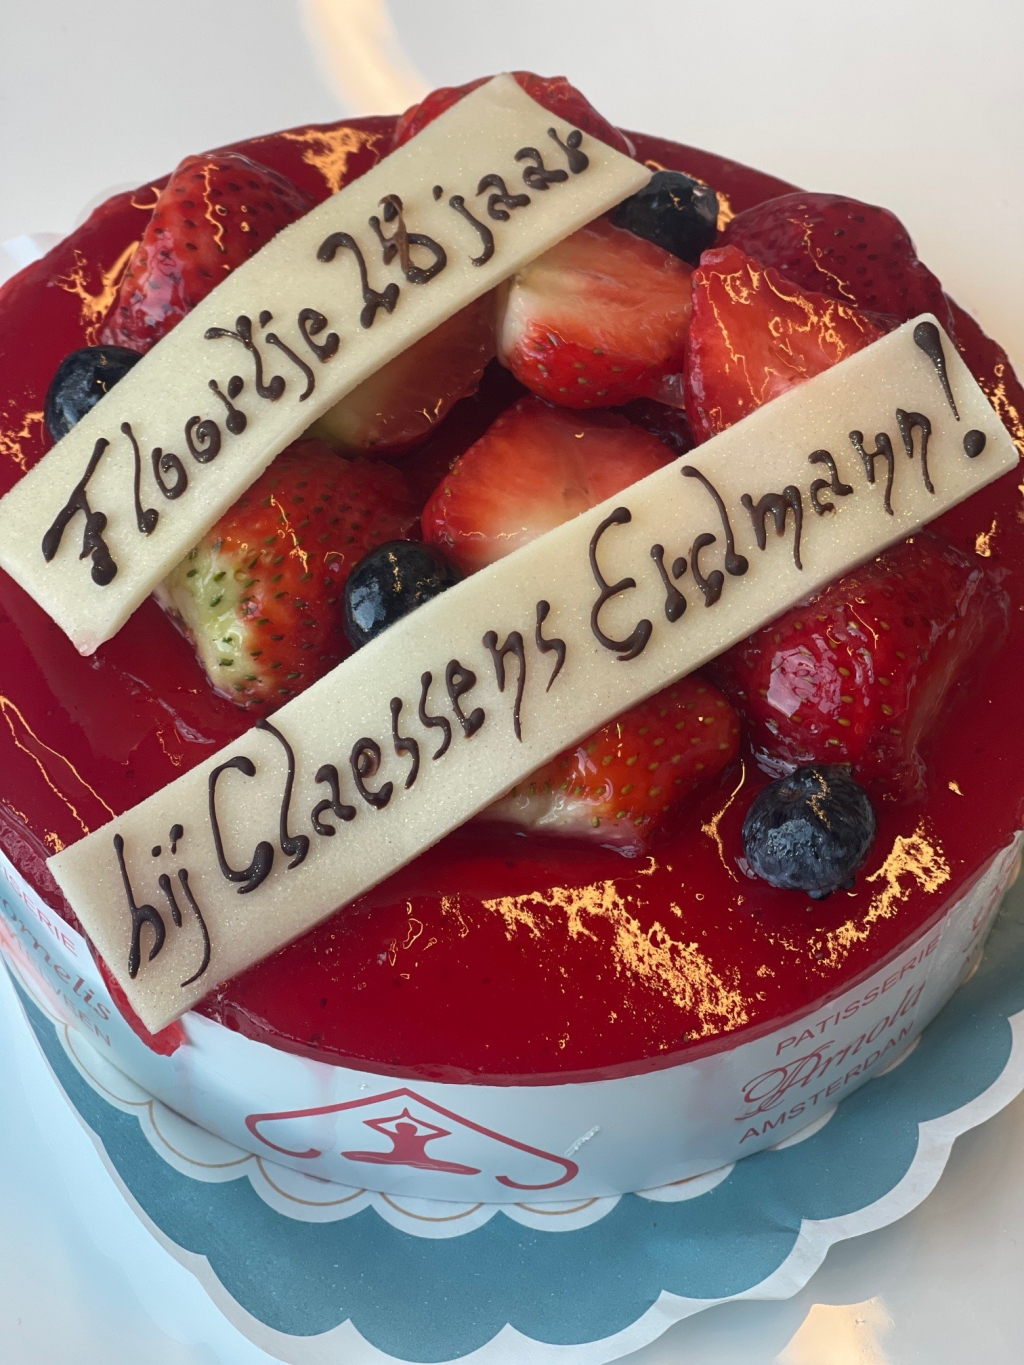 My friend's birthday cake lol : r/Genshin_Memepact